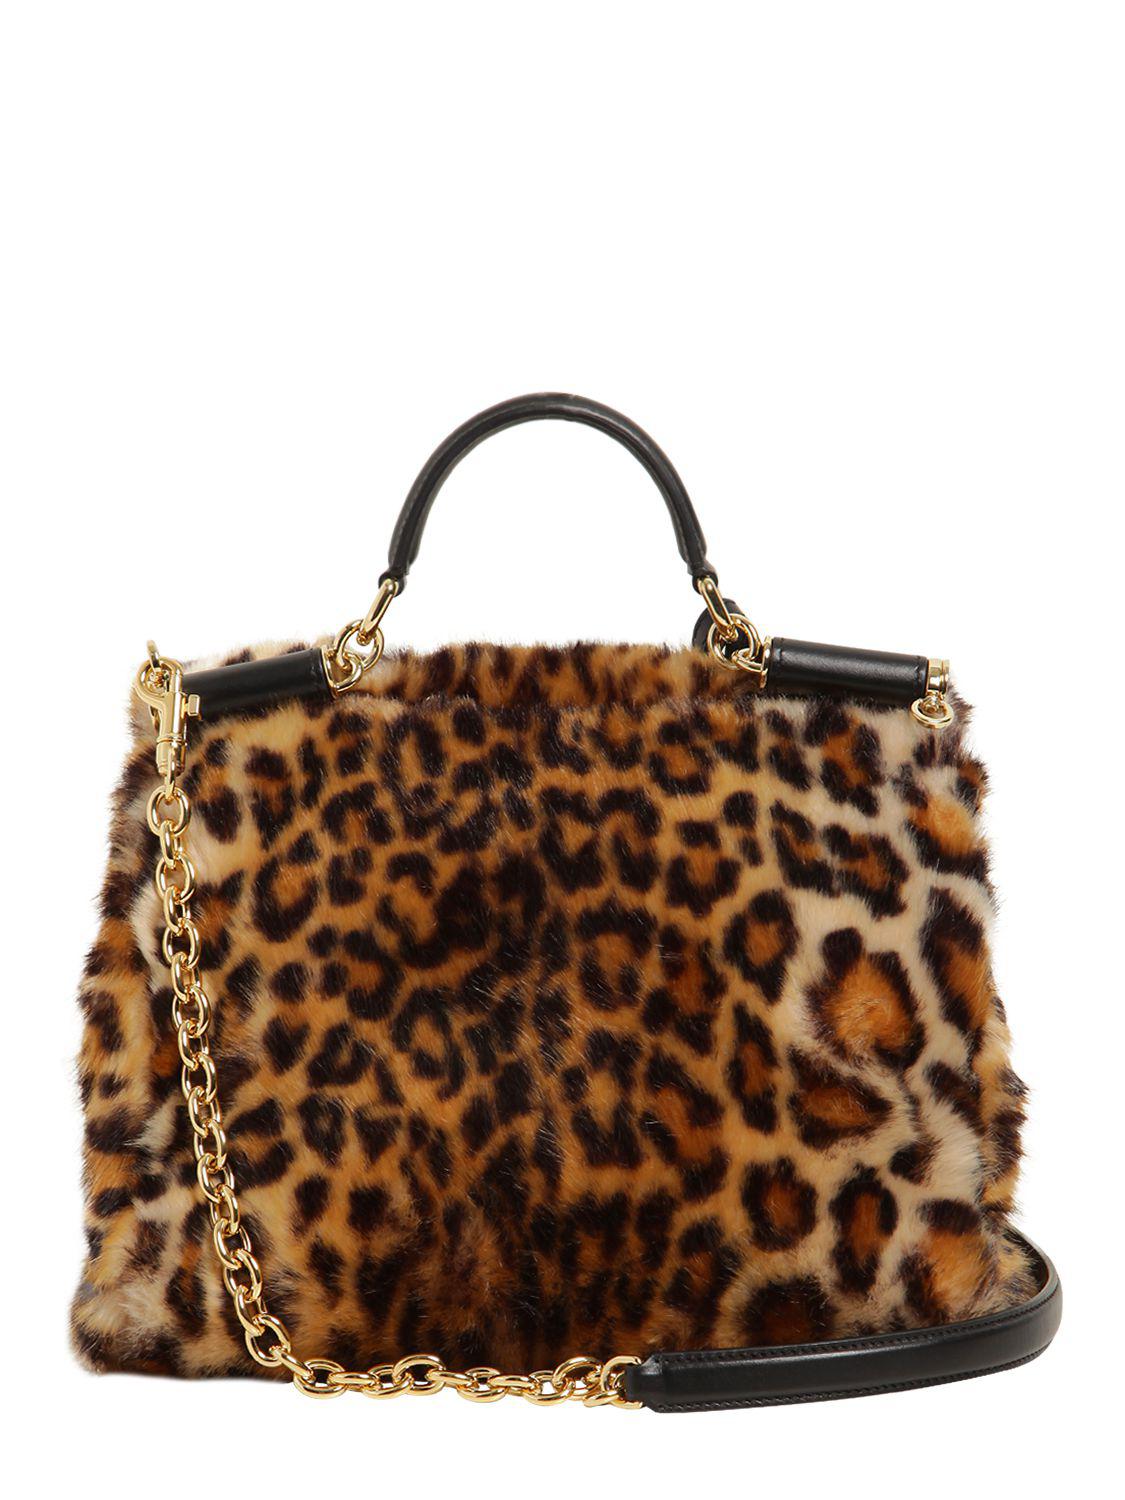 Dolce & Gabbana Sicily Leopard Print Faux Fur Bag in Brown | Lyst